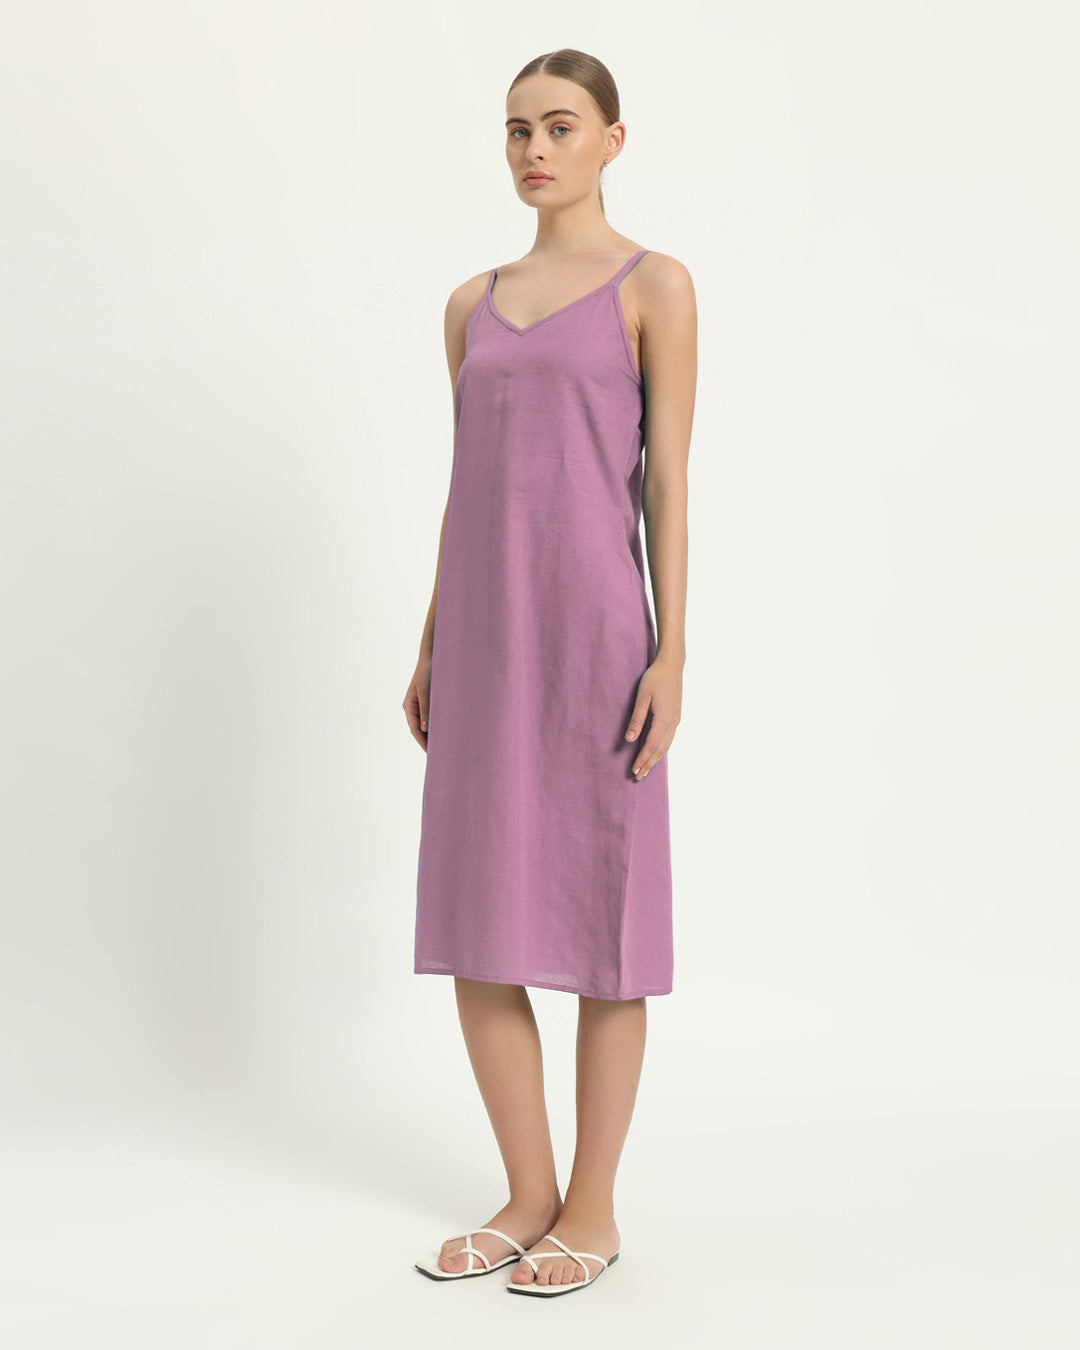 The Seesen Purple Swirl Cotton Dress